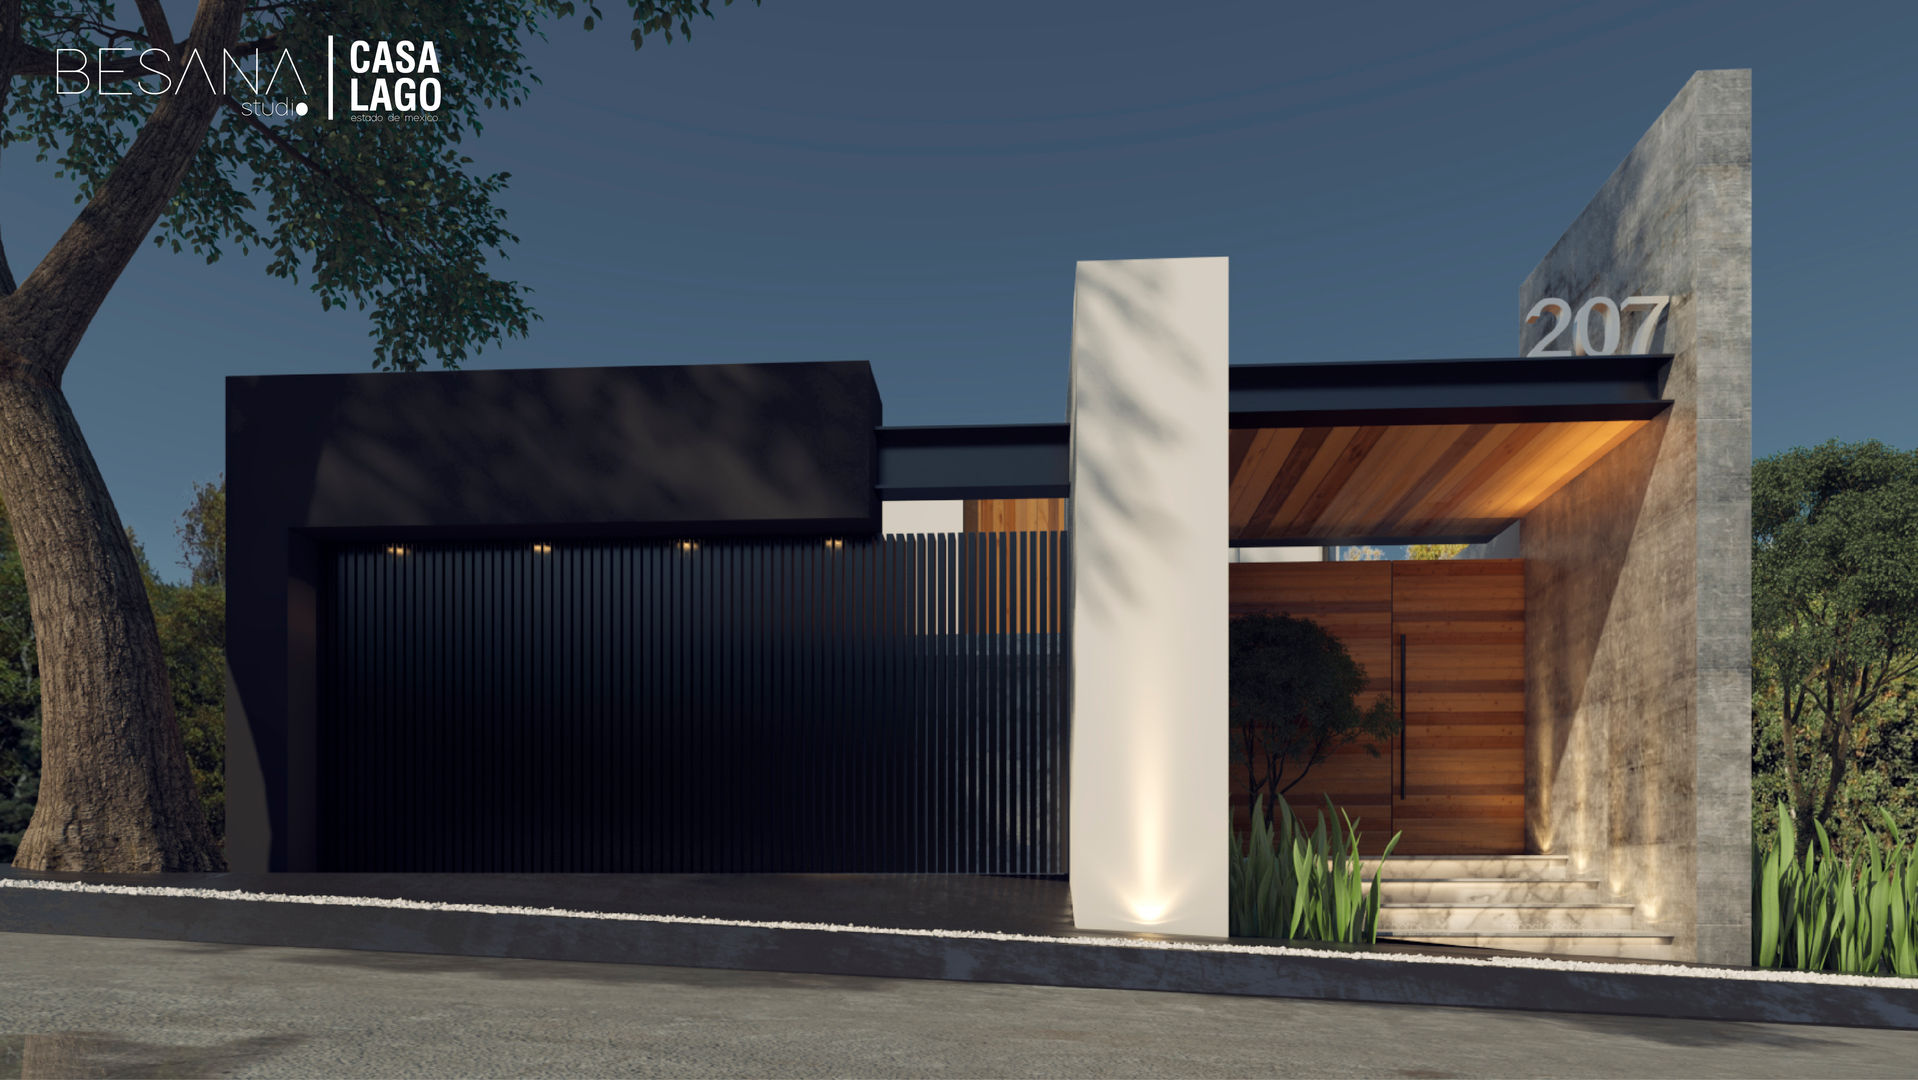 Casa LAGO, Besana Studio Besana Studio Rumah Modern